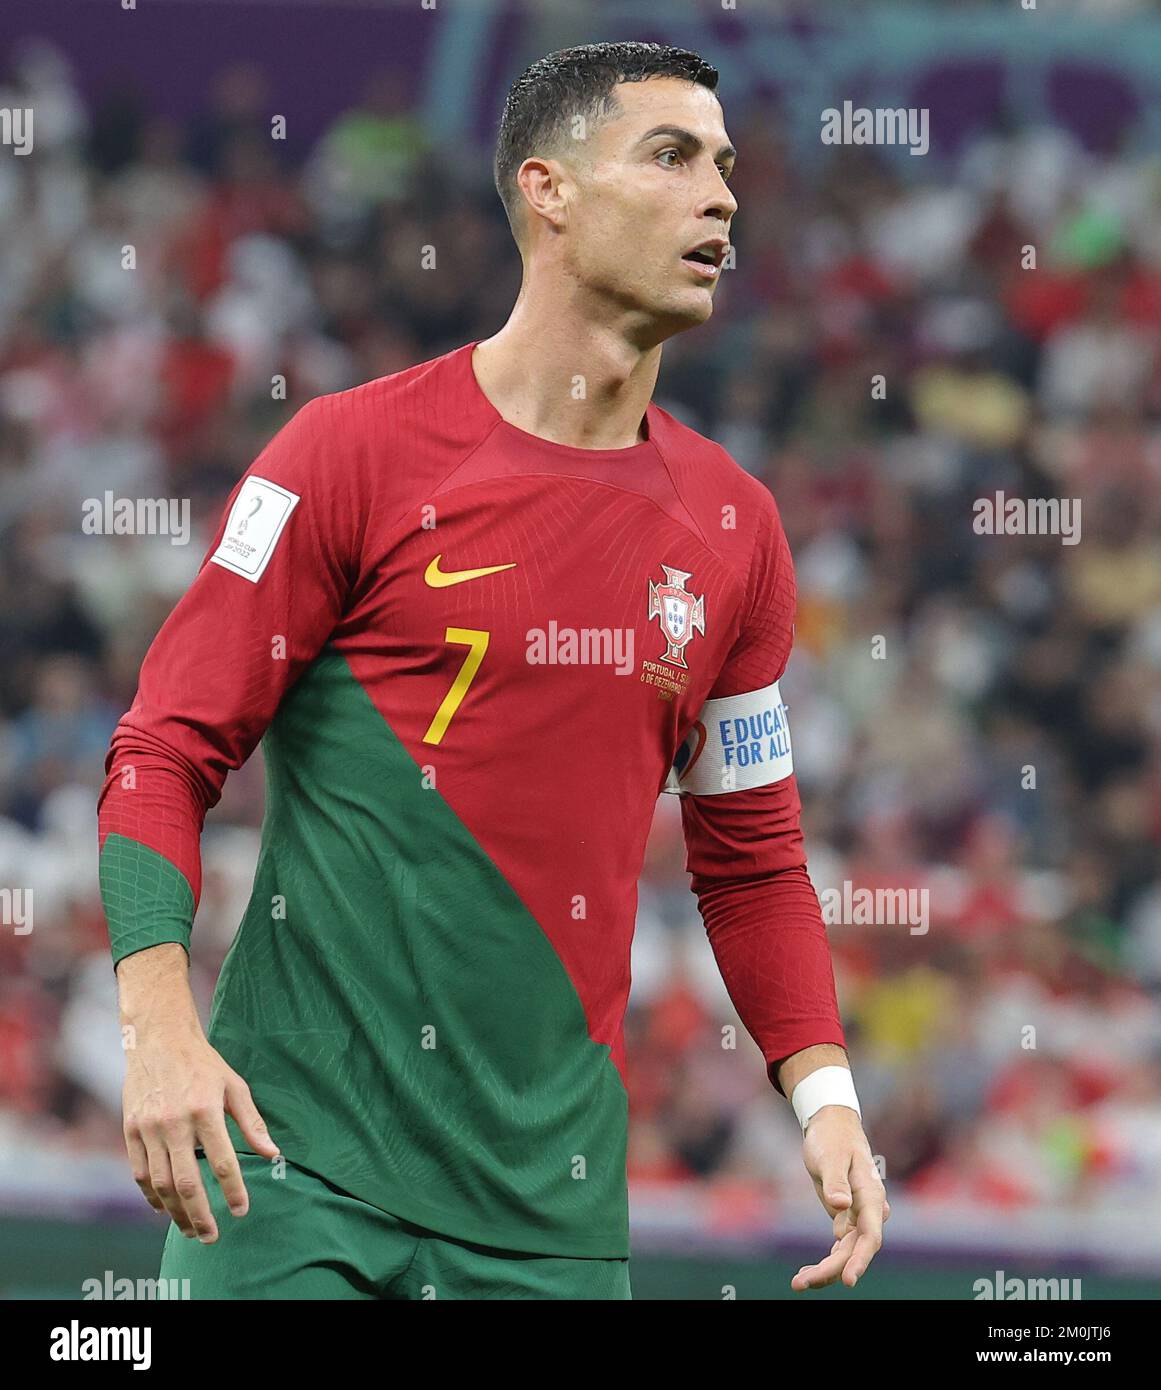 Qatar, Doha. 6th Dec, 2022. World Cup 2022 : Porugal Vs Switzerland.Match #56 - Portugal vs. Switzerland.Lusail Stadium.Portugal 6 : 1 Switzerland .3 goals Goal by Portugal .# 26 G. Ramos one goal .by Portugal #3 PEPE & one goal by # 5 RAPHAEL GUERREIRO of Portugal.one by #15 Rafeal Leao of Por .& one by #5 AKANJI of Swiss.Christiano Ronaldo in Action. (Credit Image: © Seshadri Sukumar/ZUMA Press Wire) Stock Photo